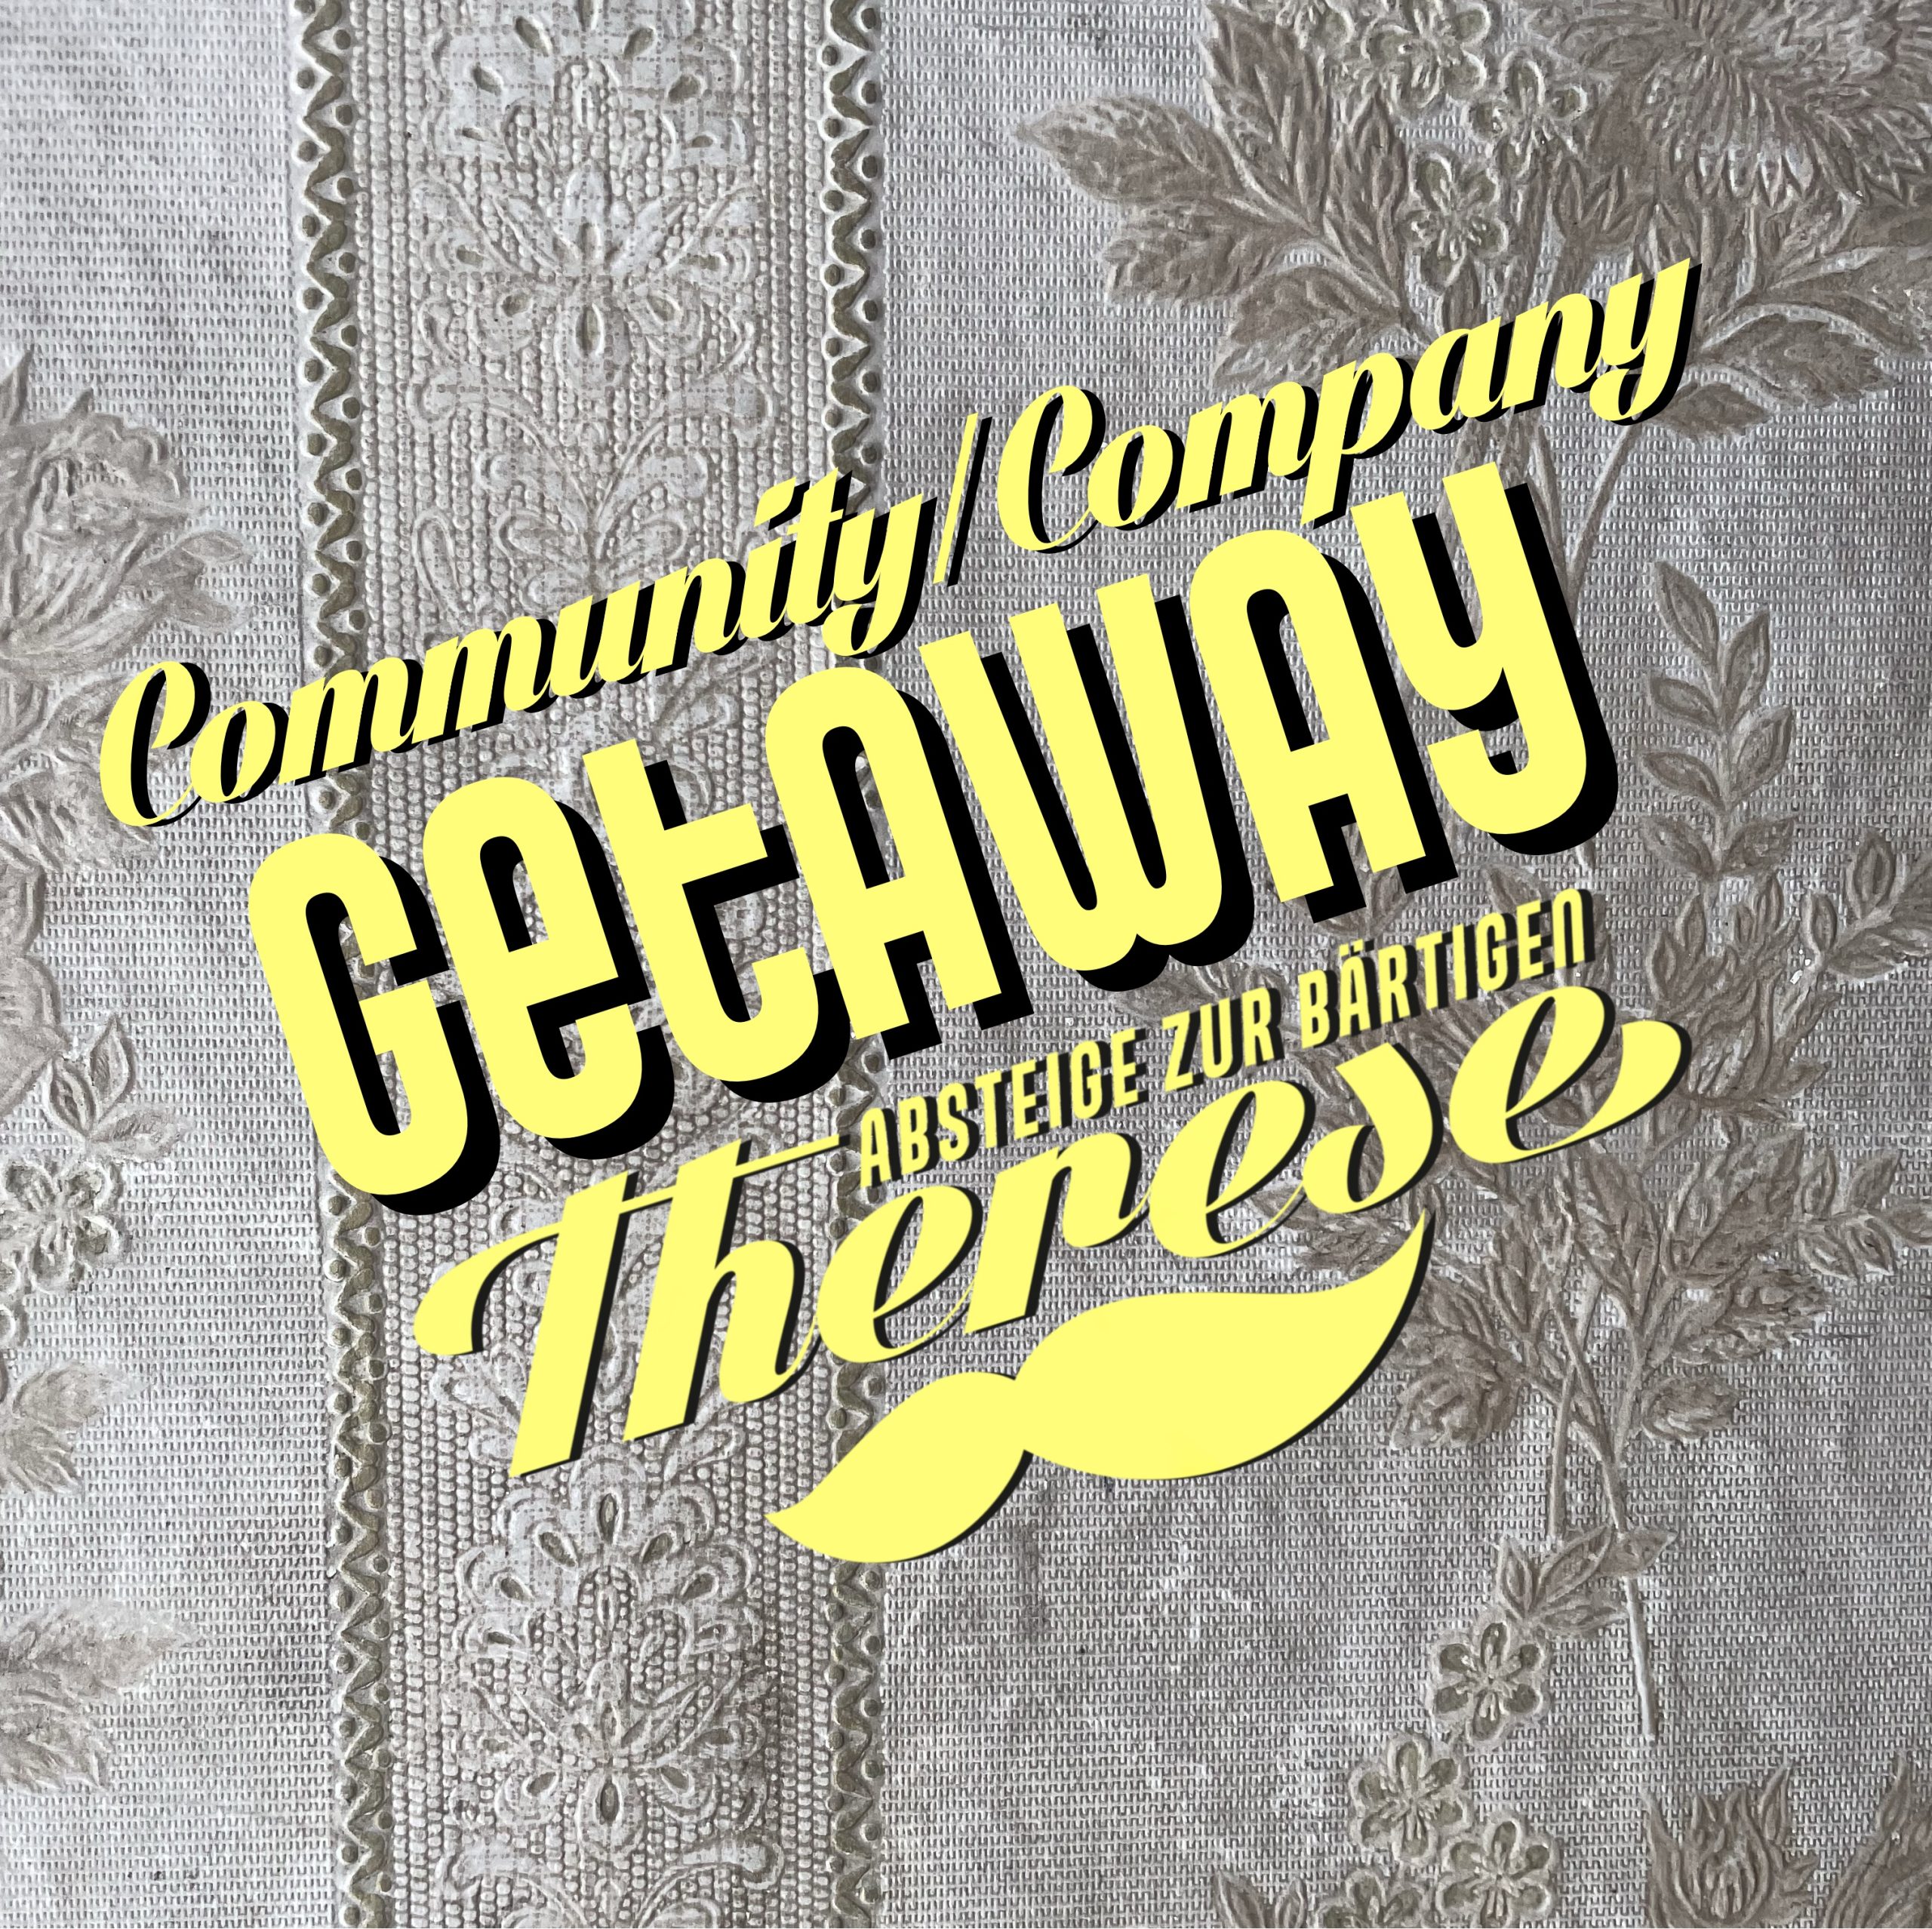 Community Getaway / Company Getaway VI